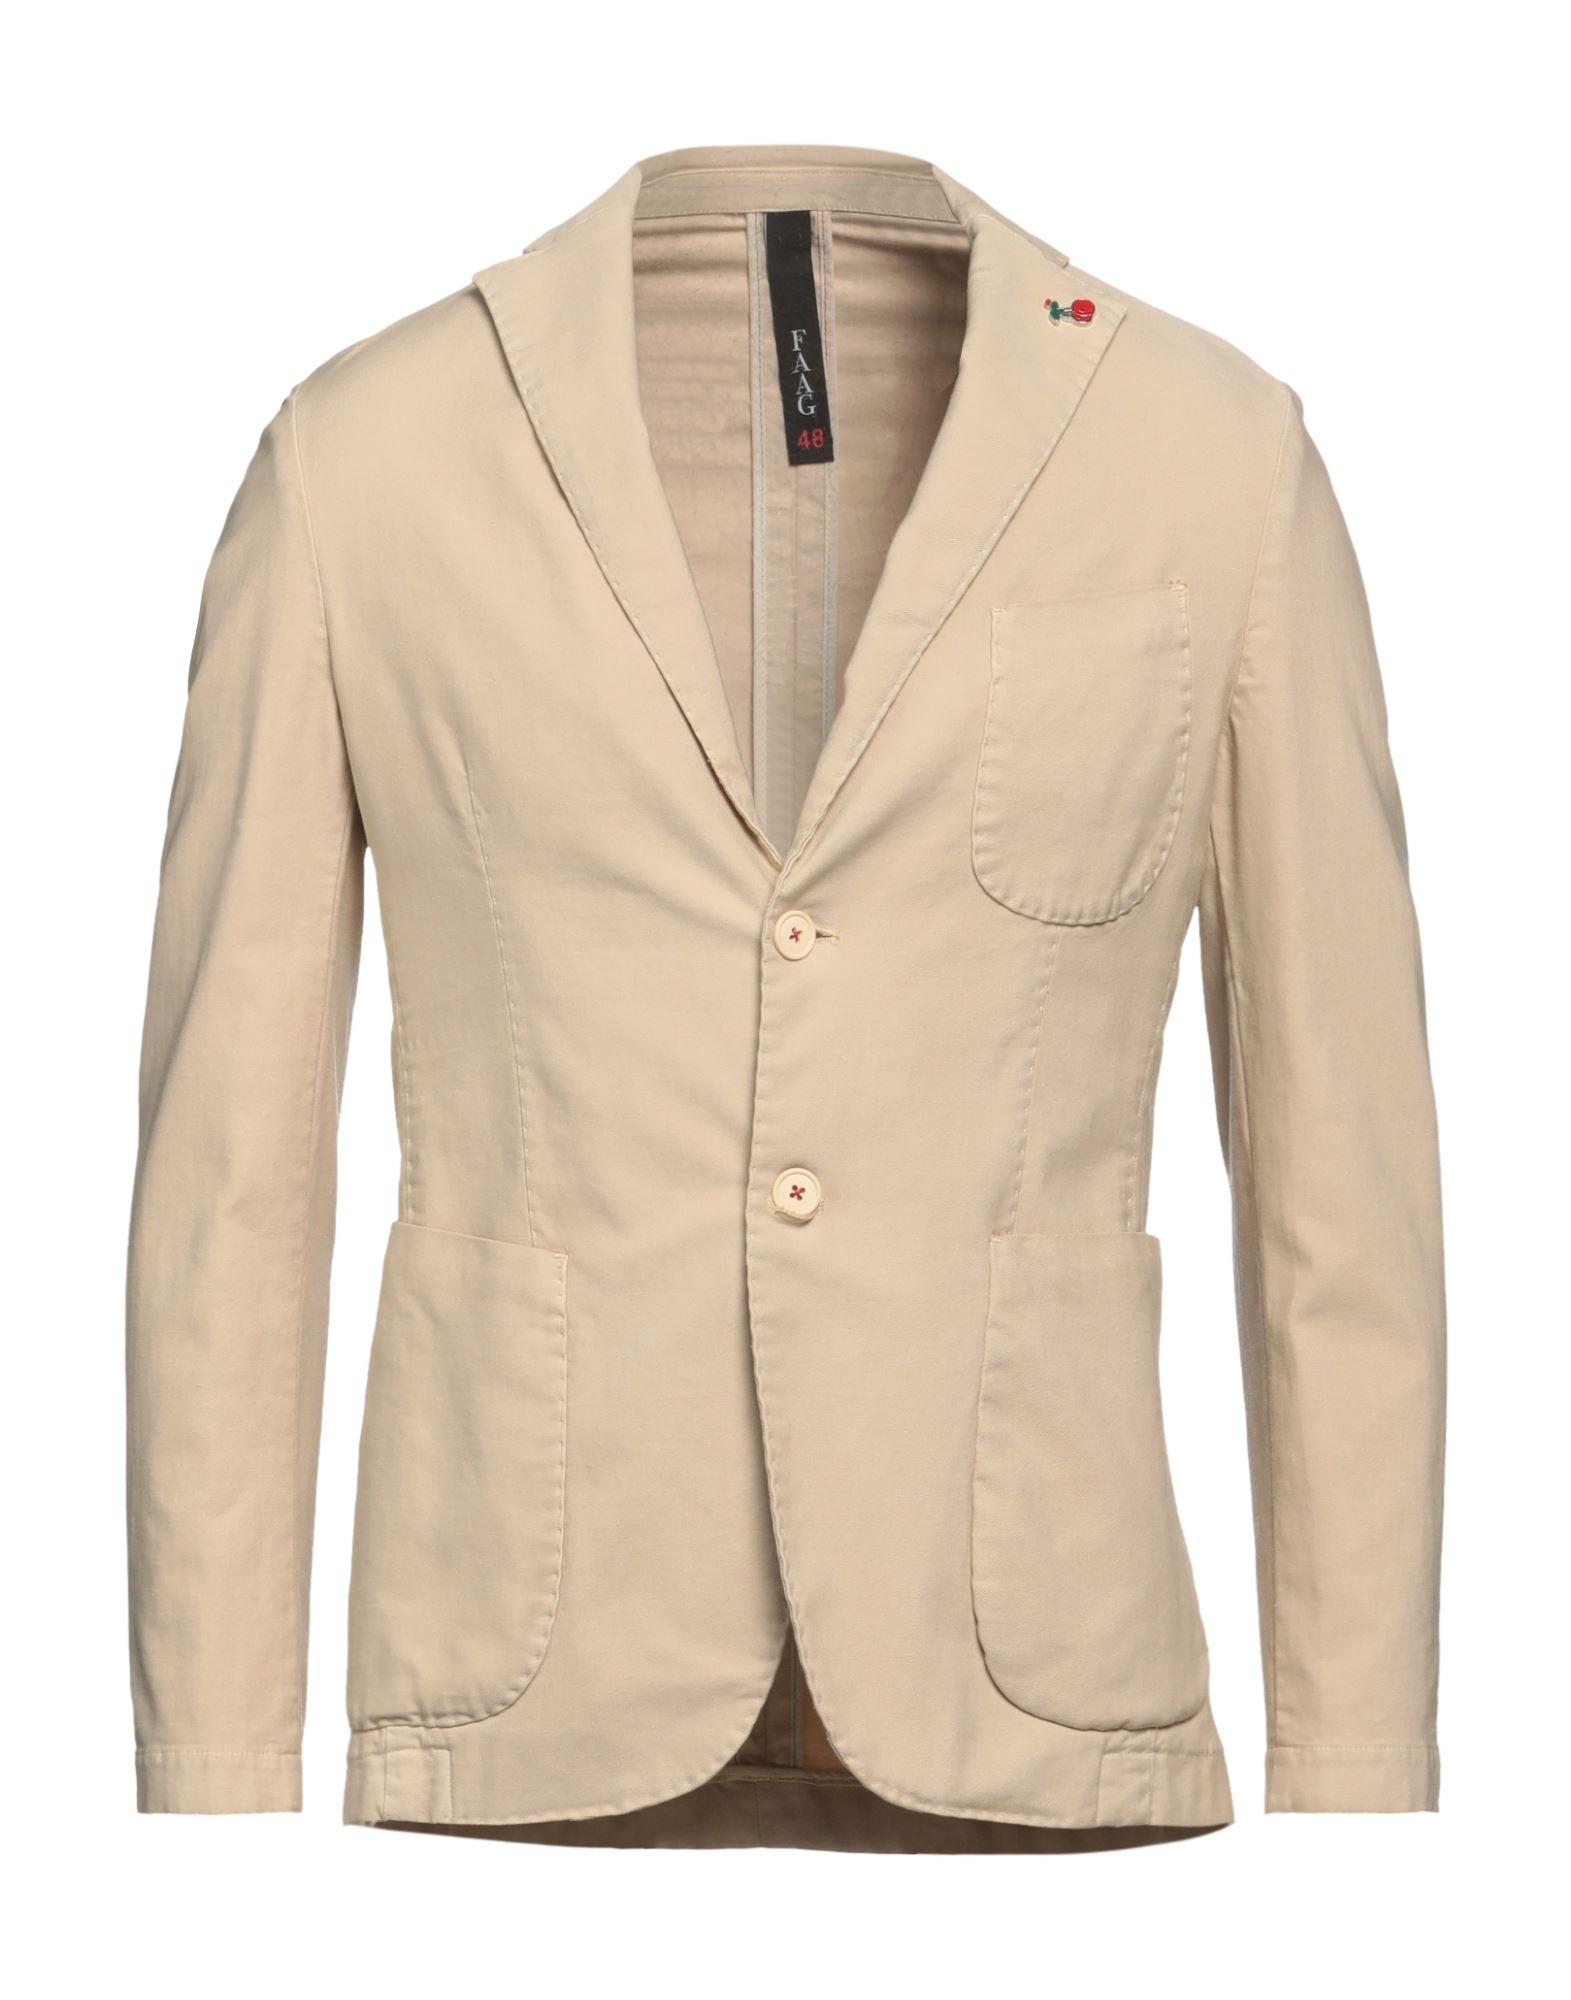 FAAG Suit jackets